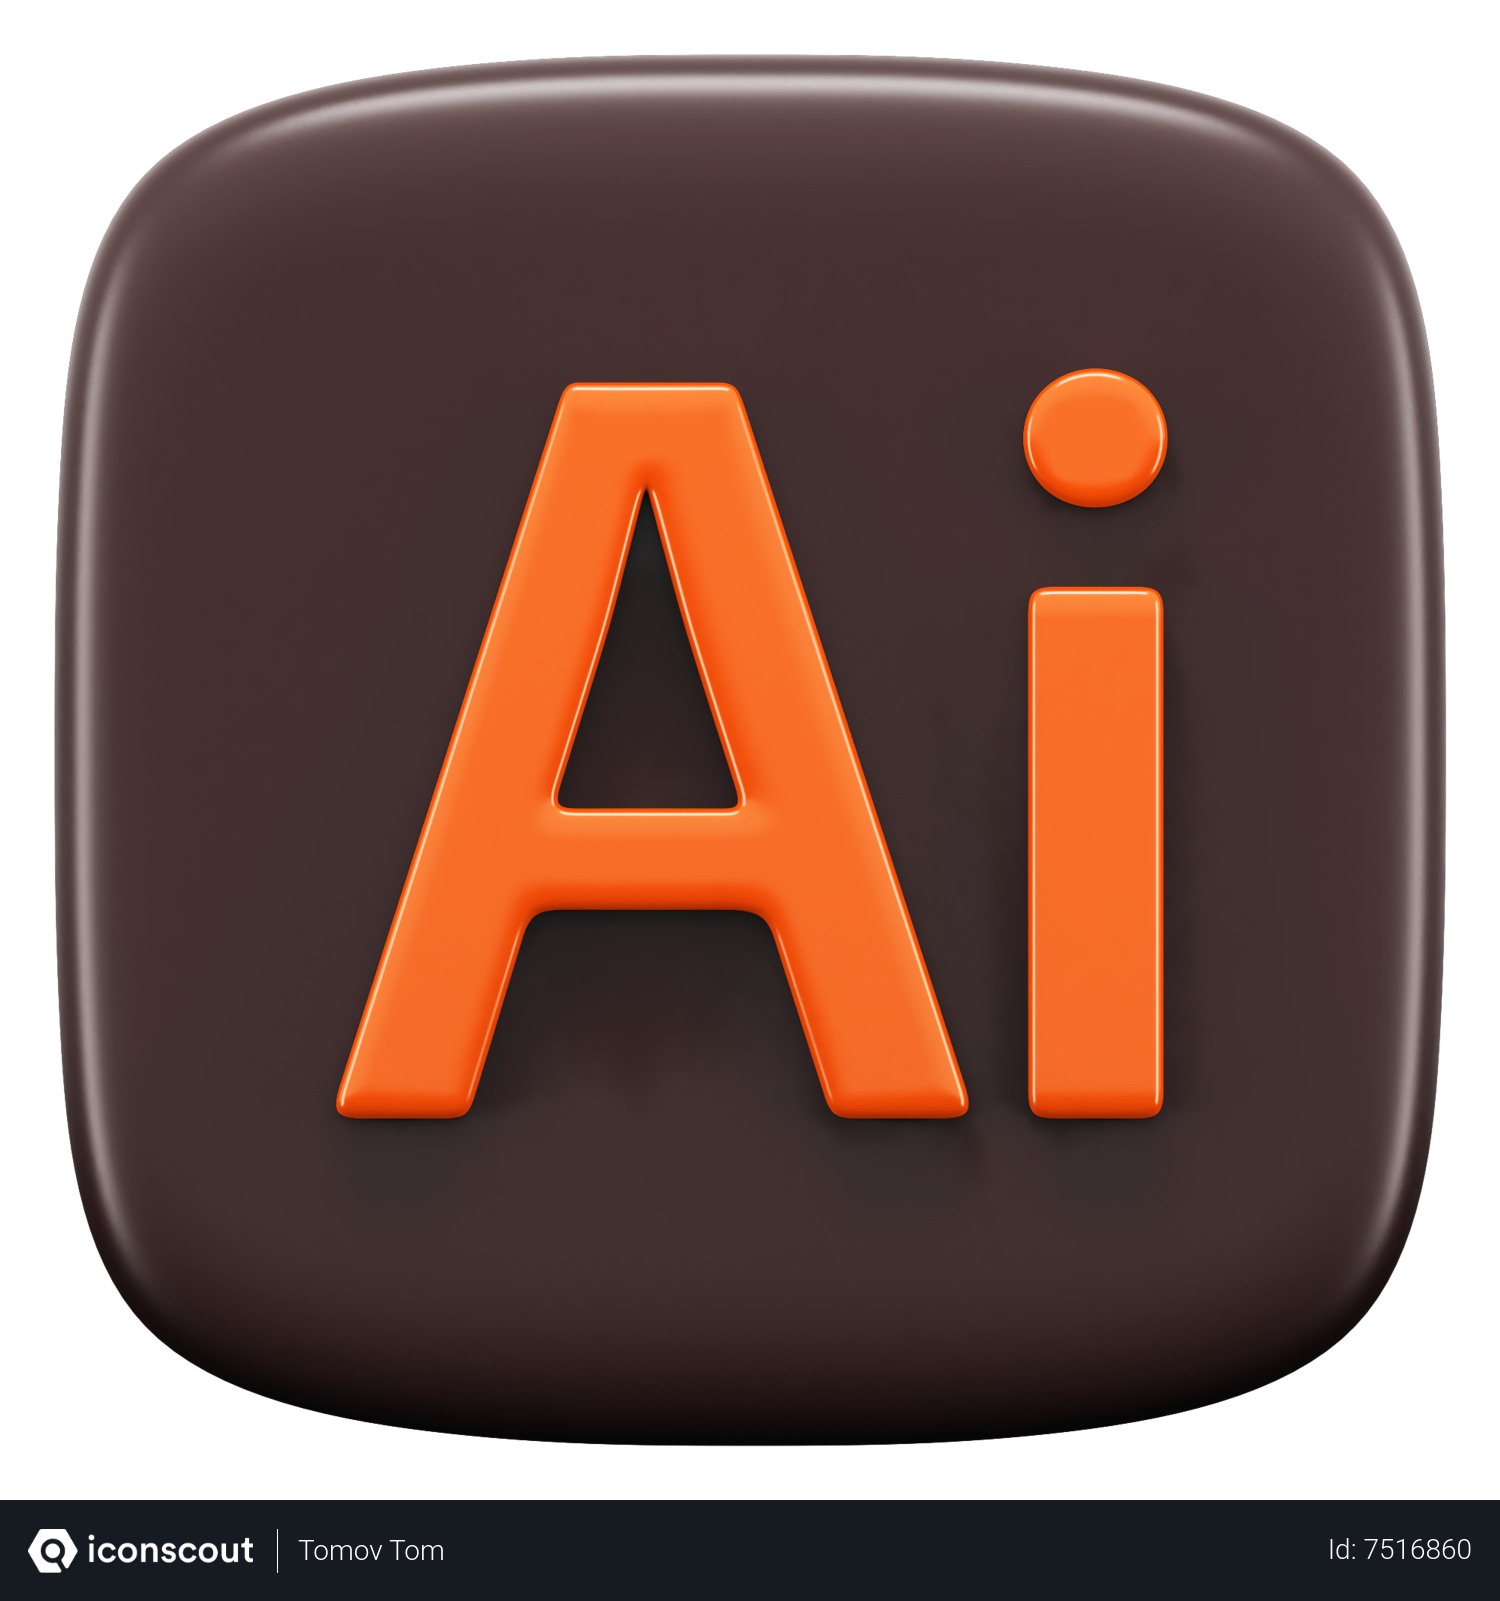 40+ Outstanding Logo Templates for Adobe Illustrator – Creatisimo